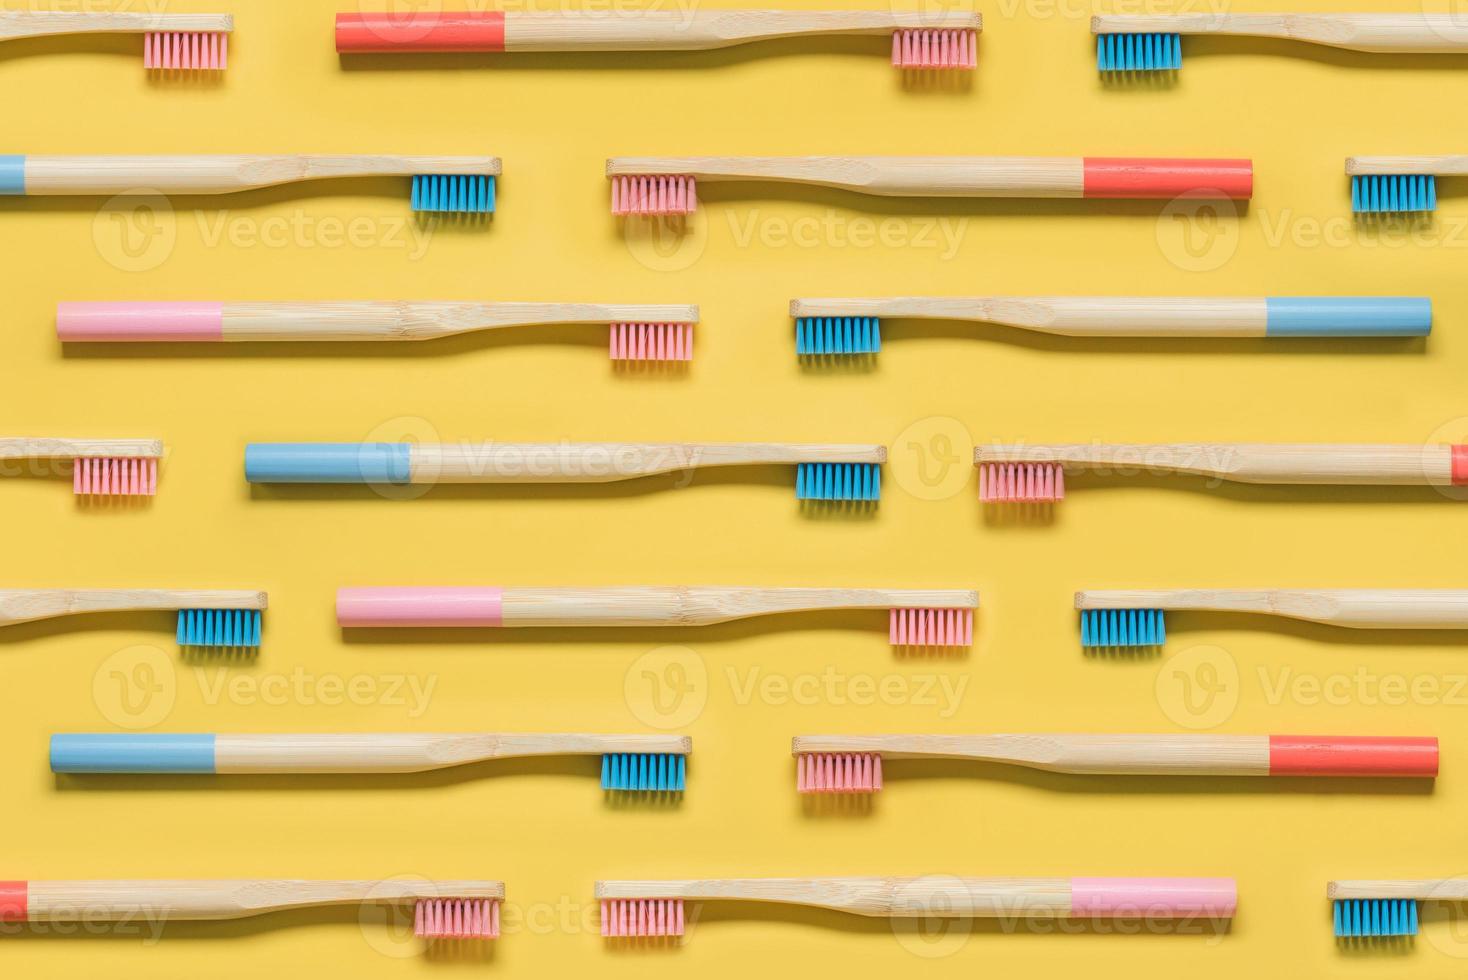 escovas de dentes de bambu coloridas entrelaçadas foto